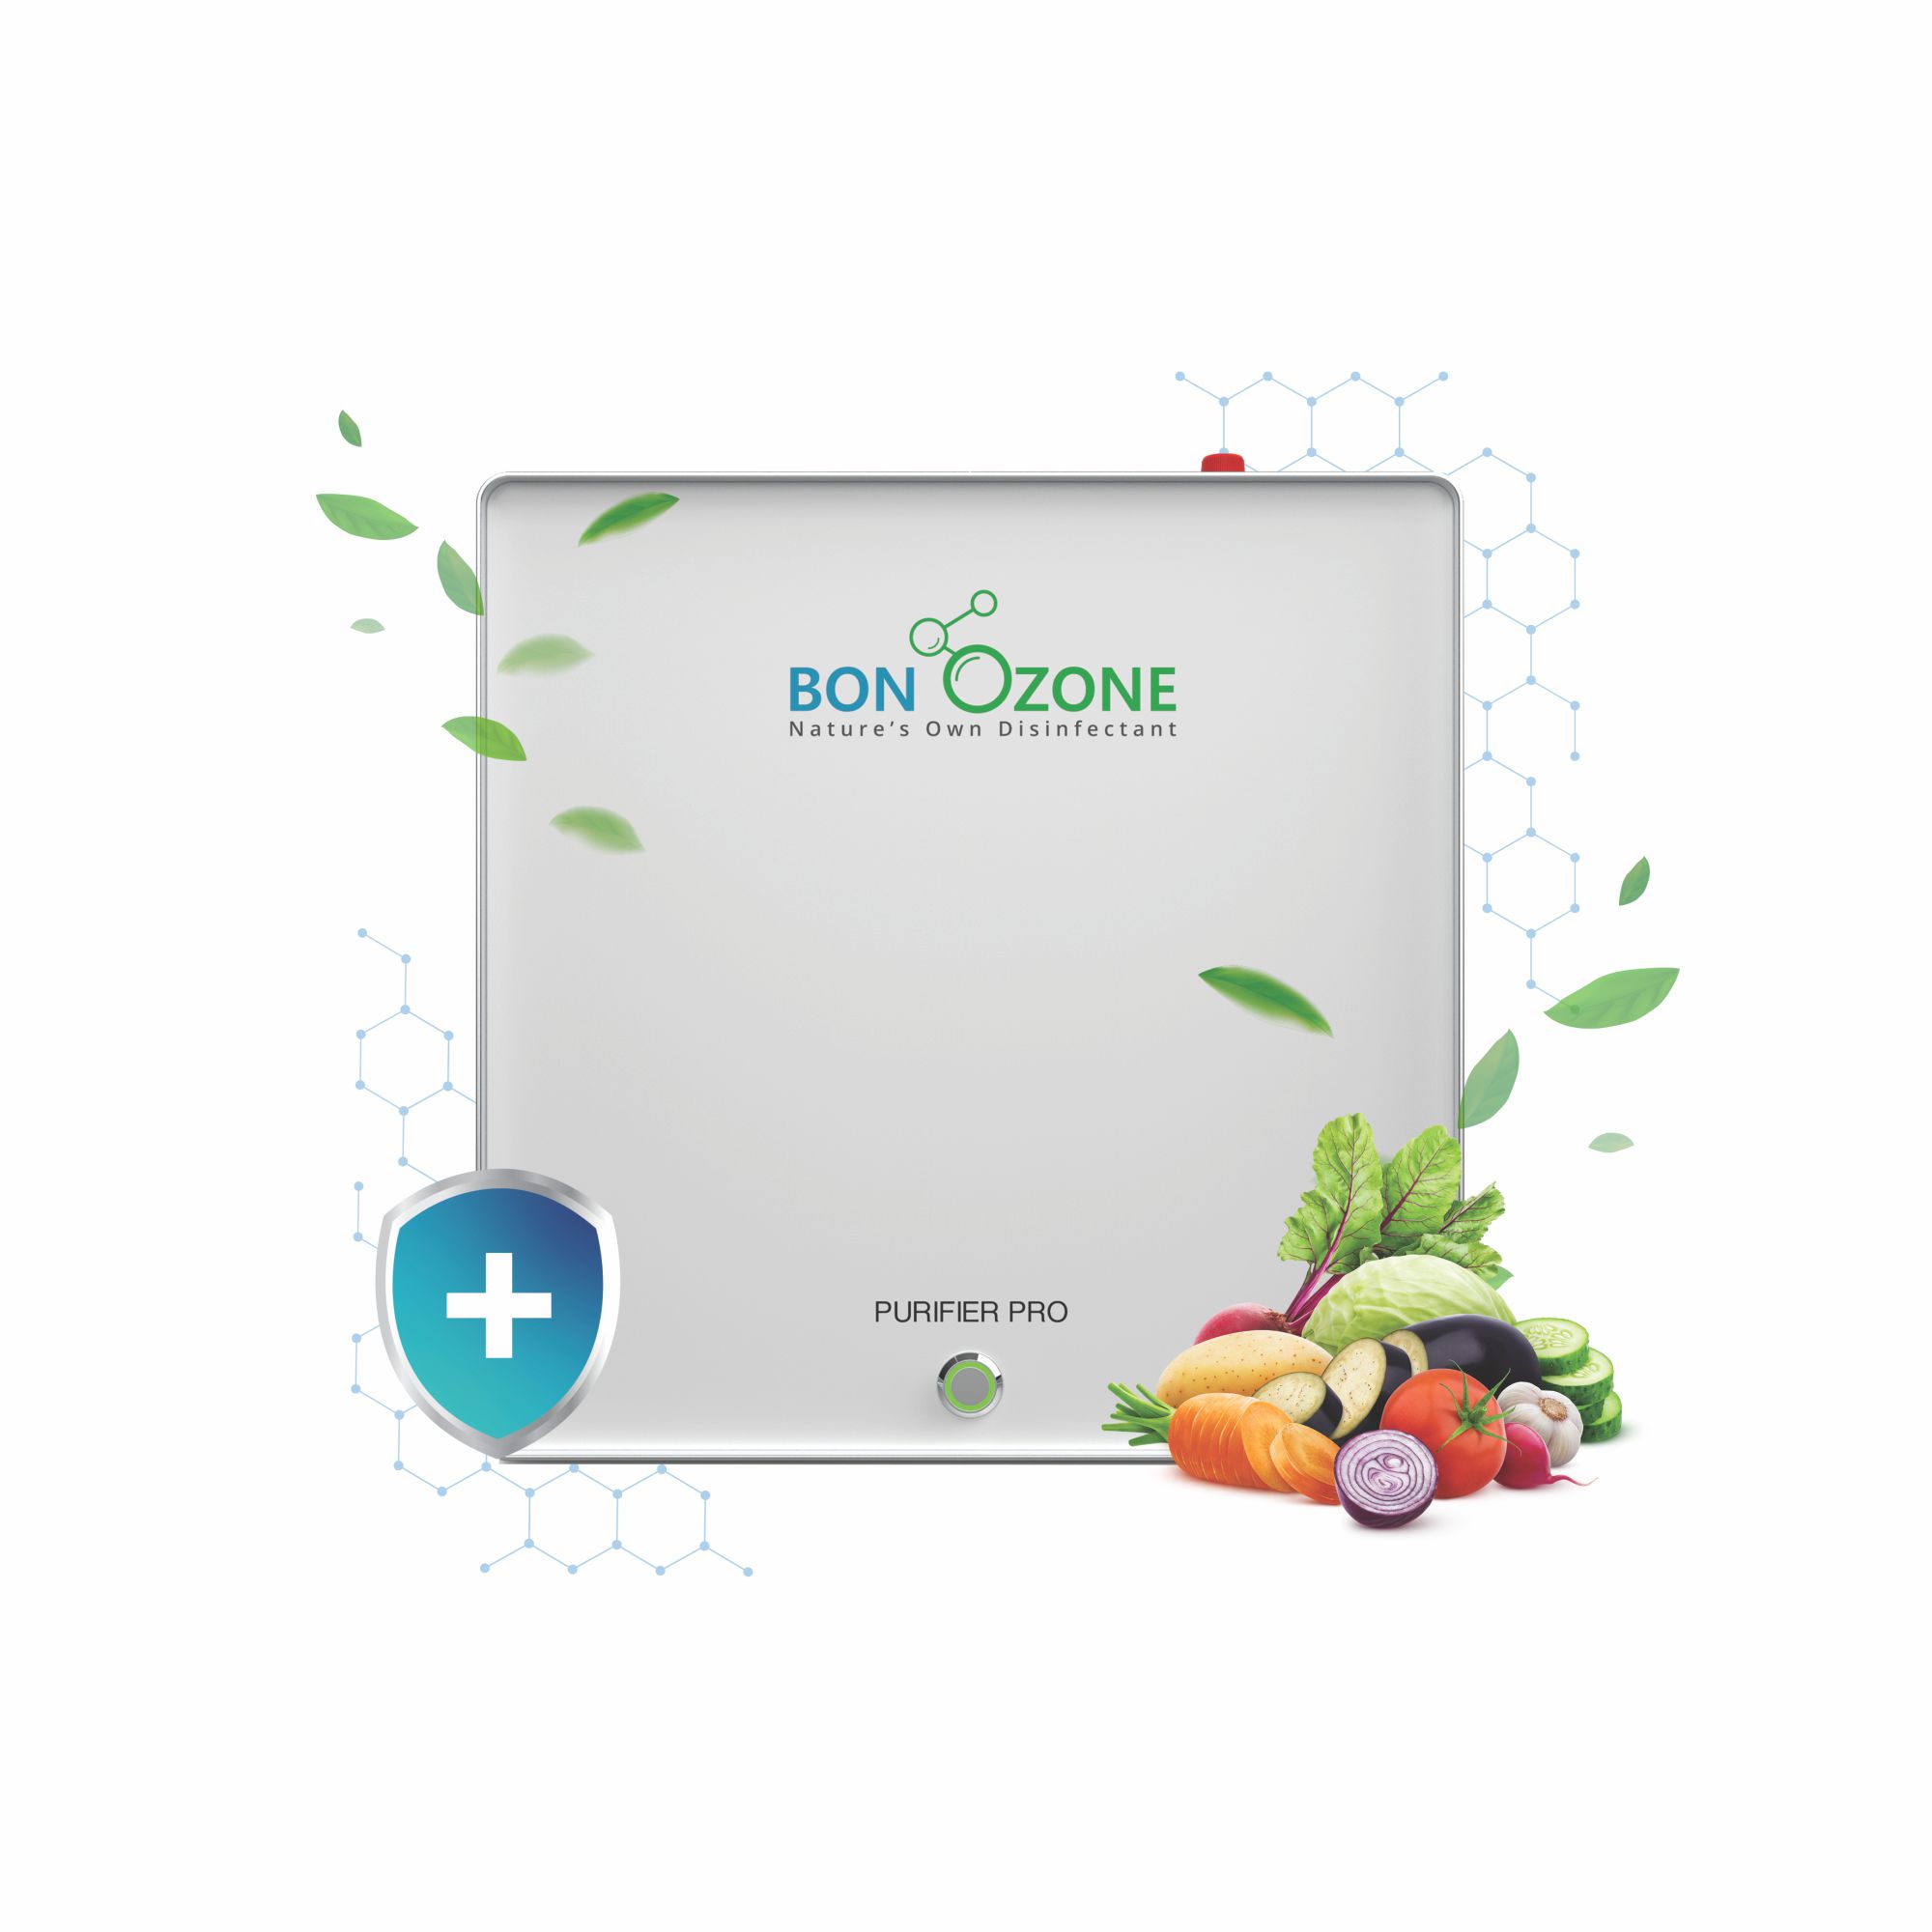 BonOzone Purifier Pro with vegetables